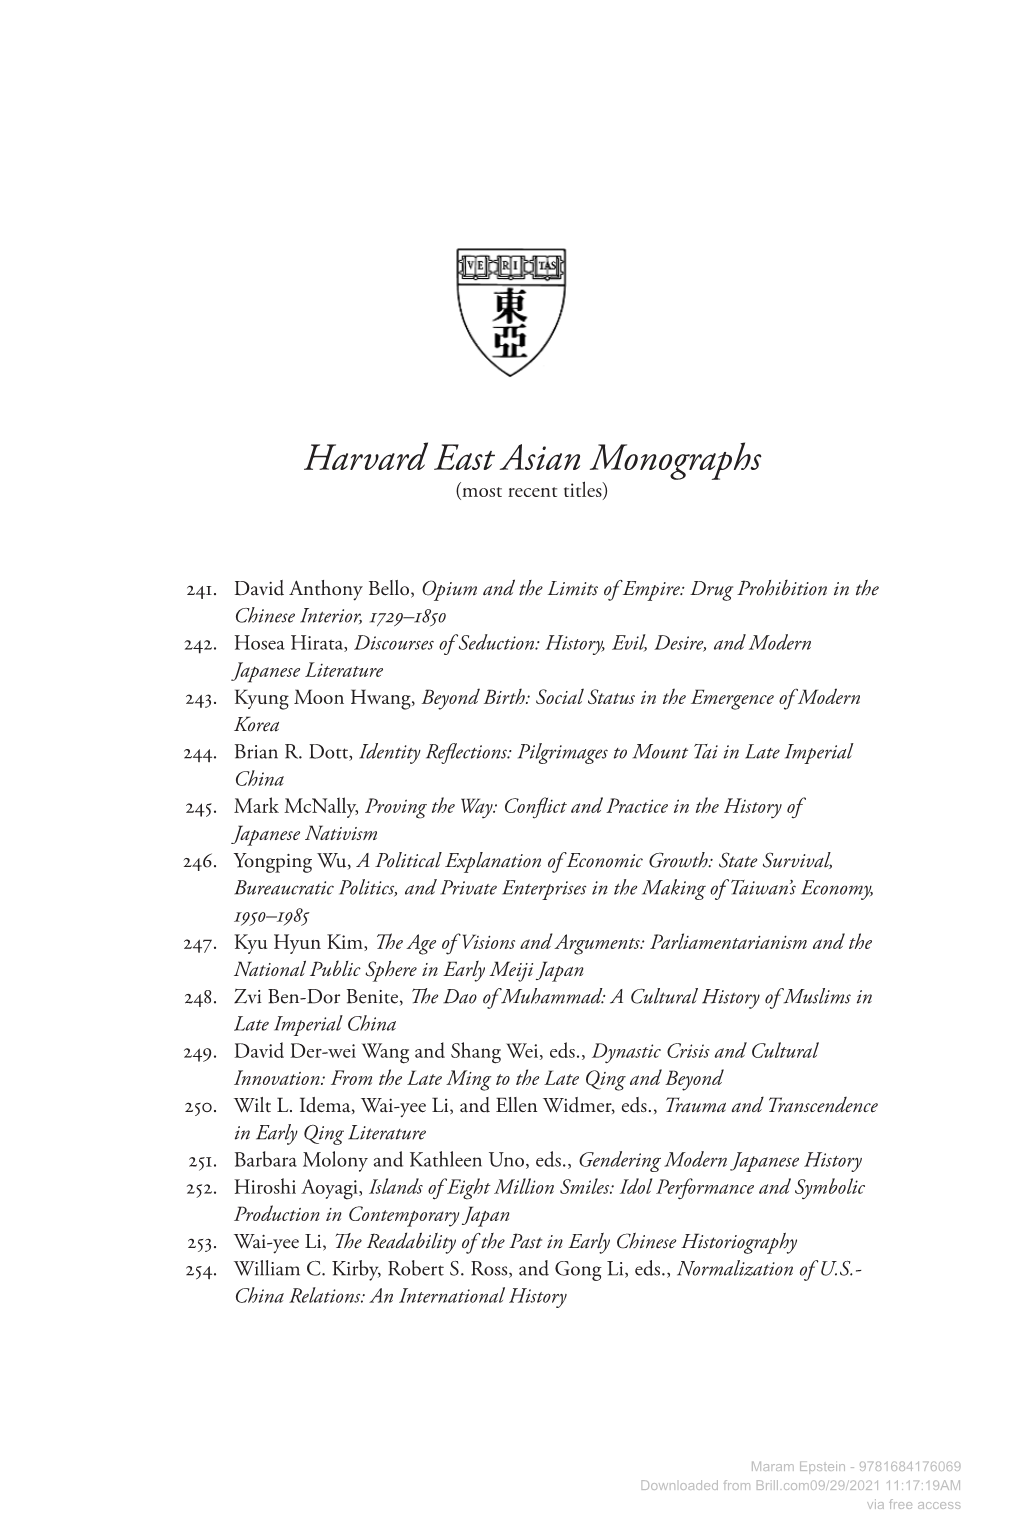 Harvard East Asian Monographs (Most Recent Titles)